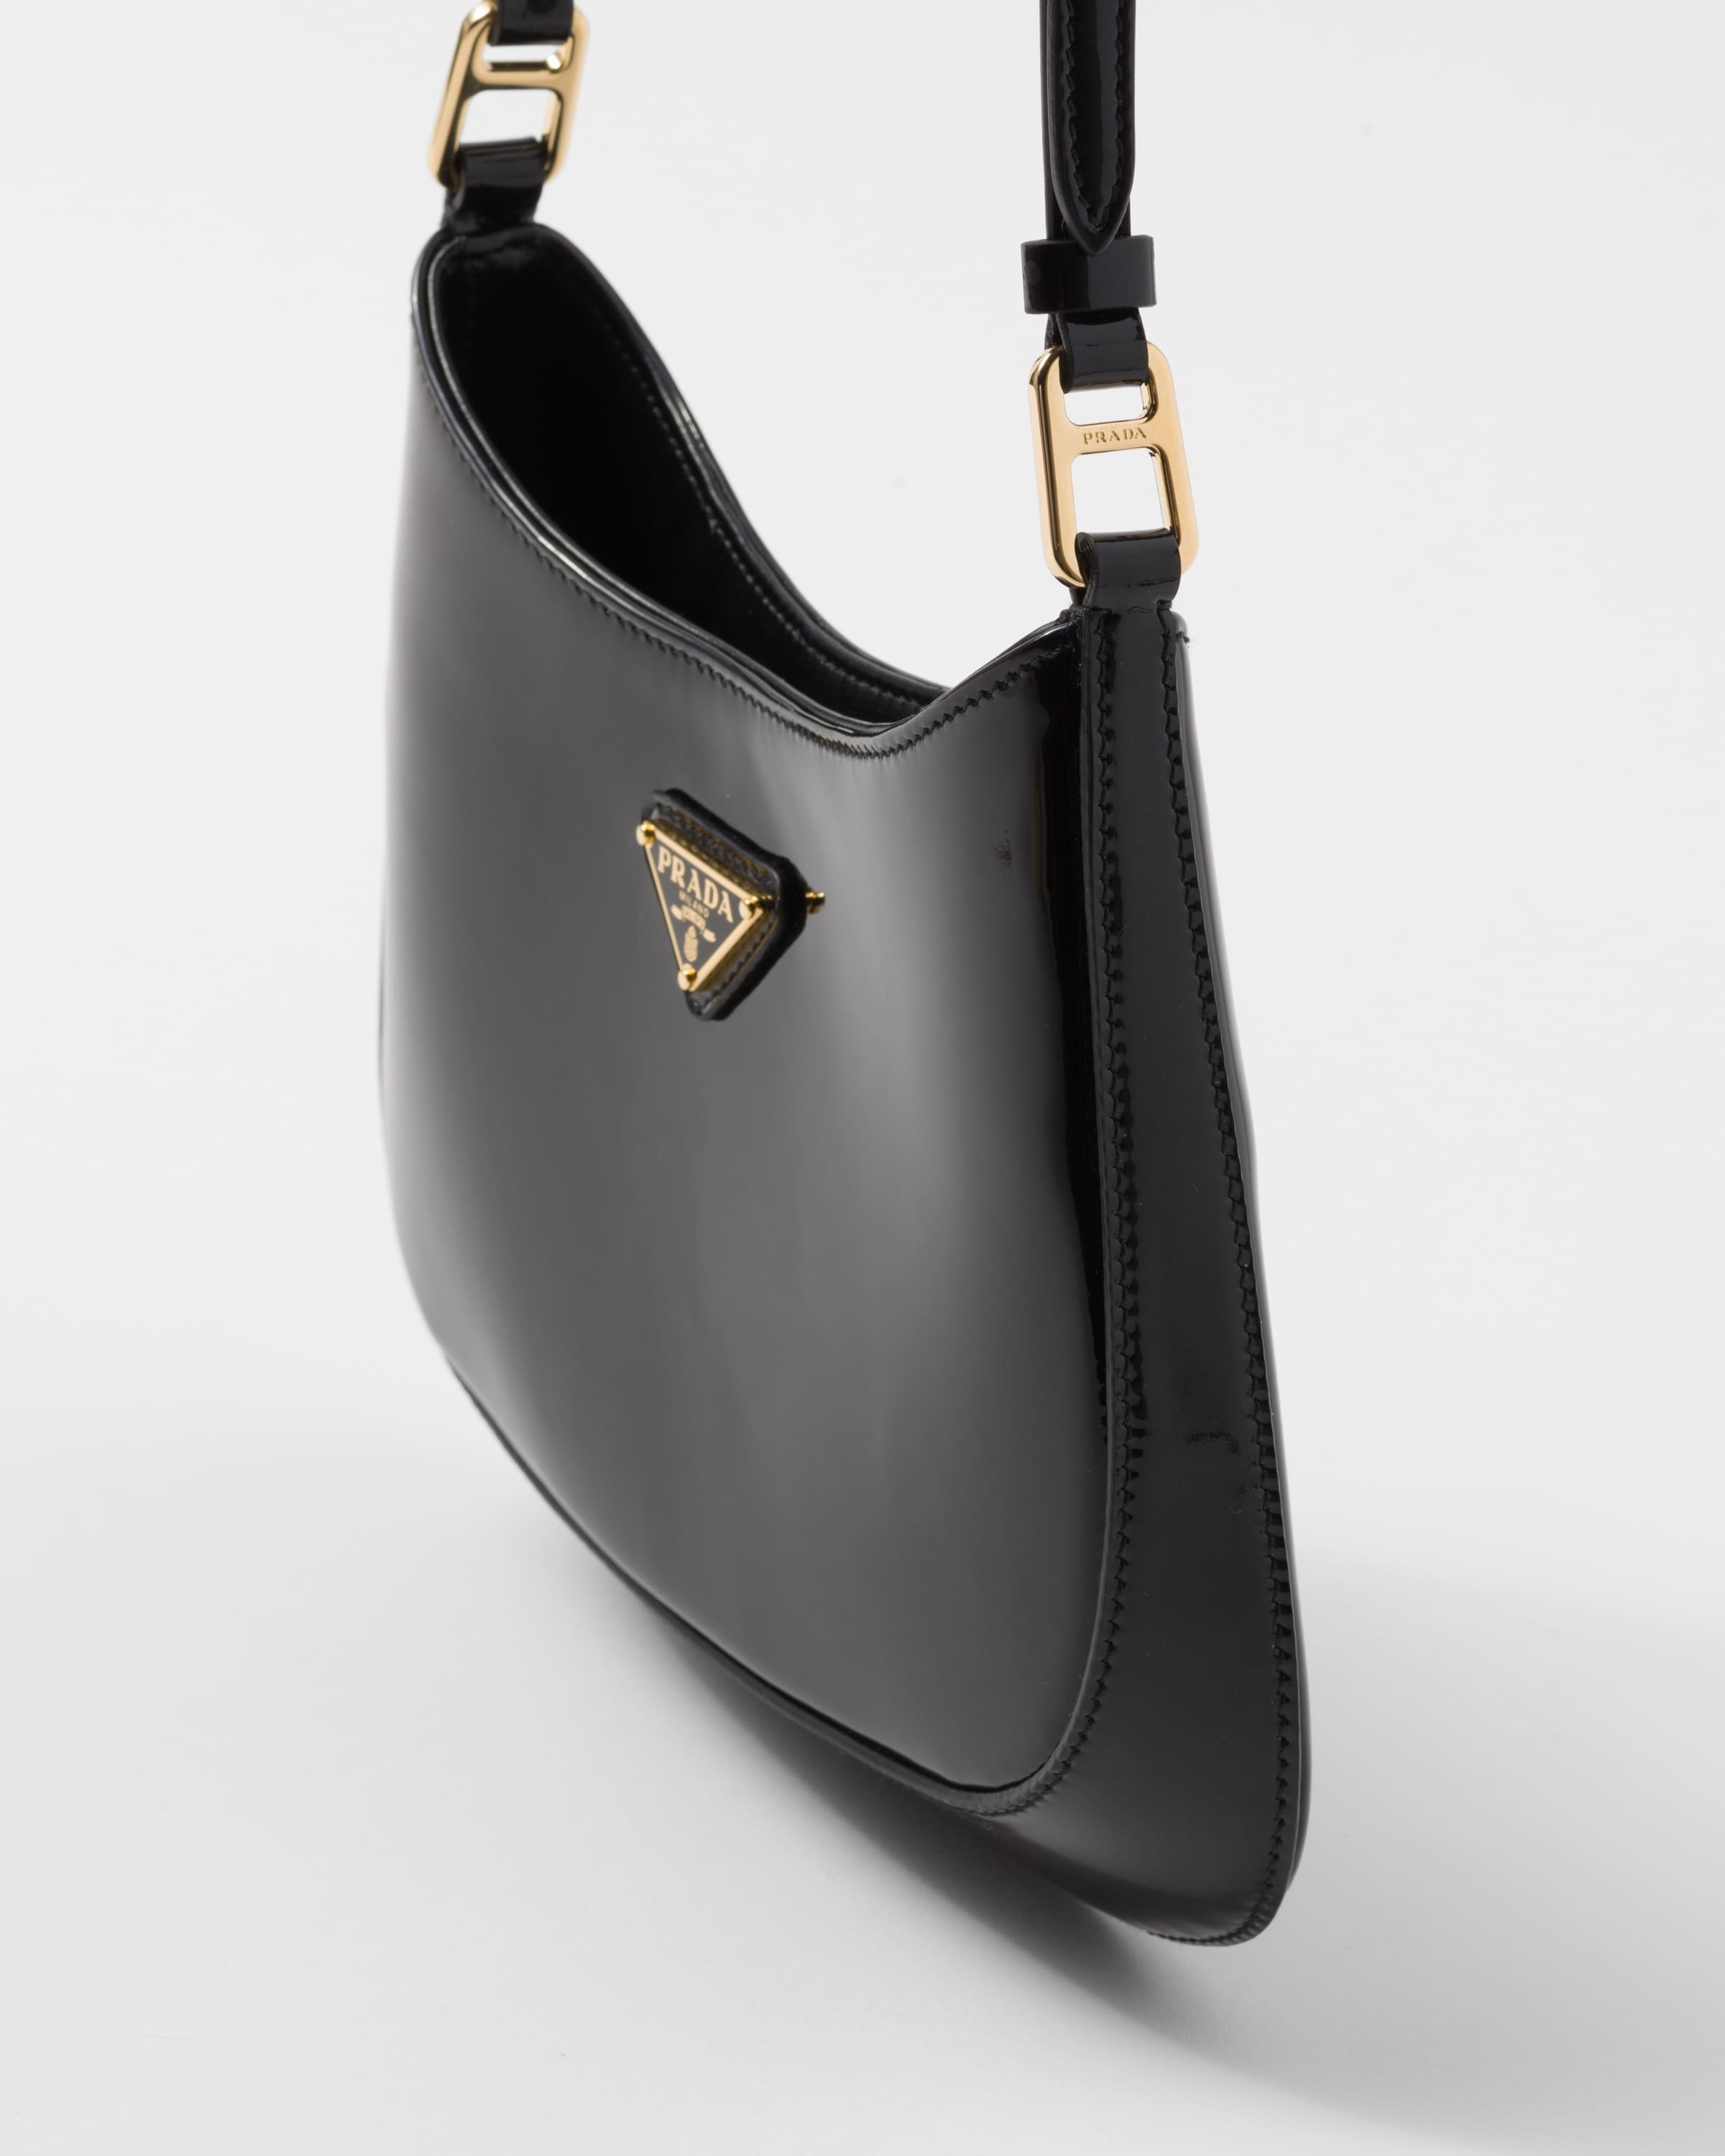 Prada Cleo patent leather bag - 6